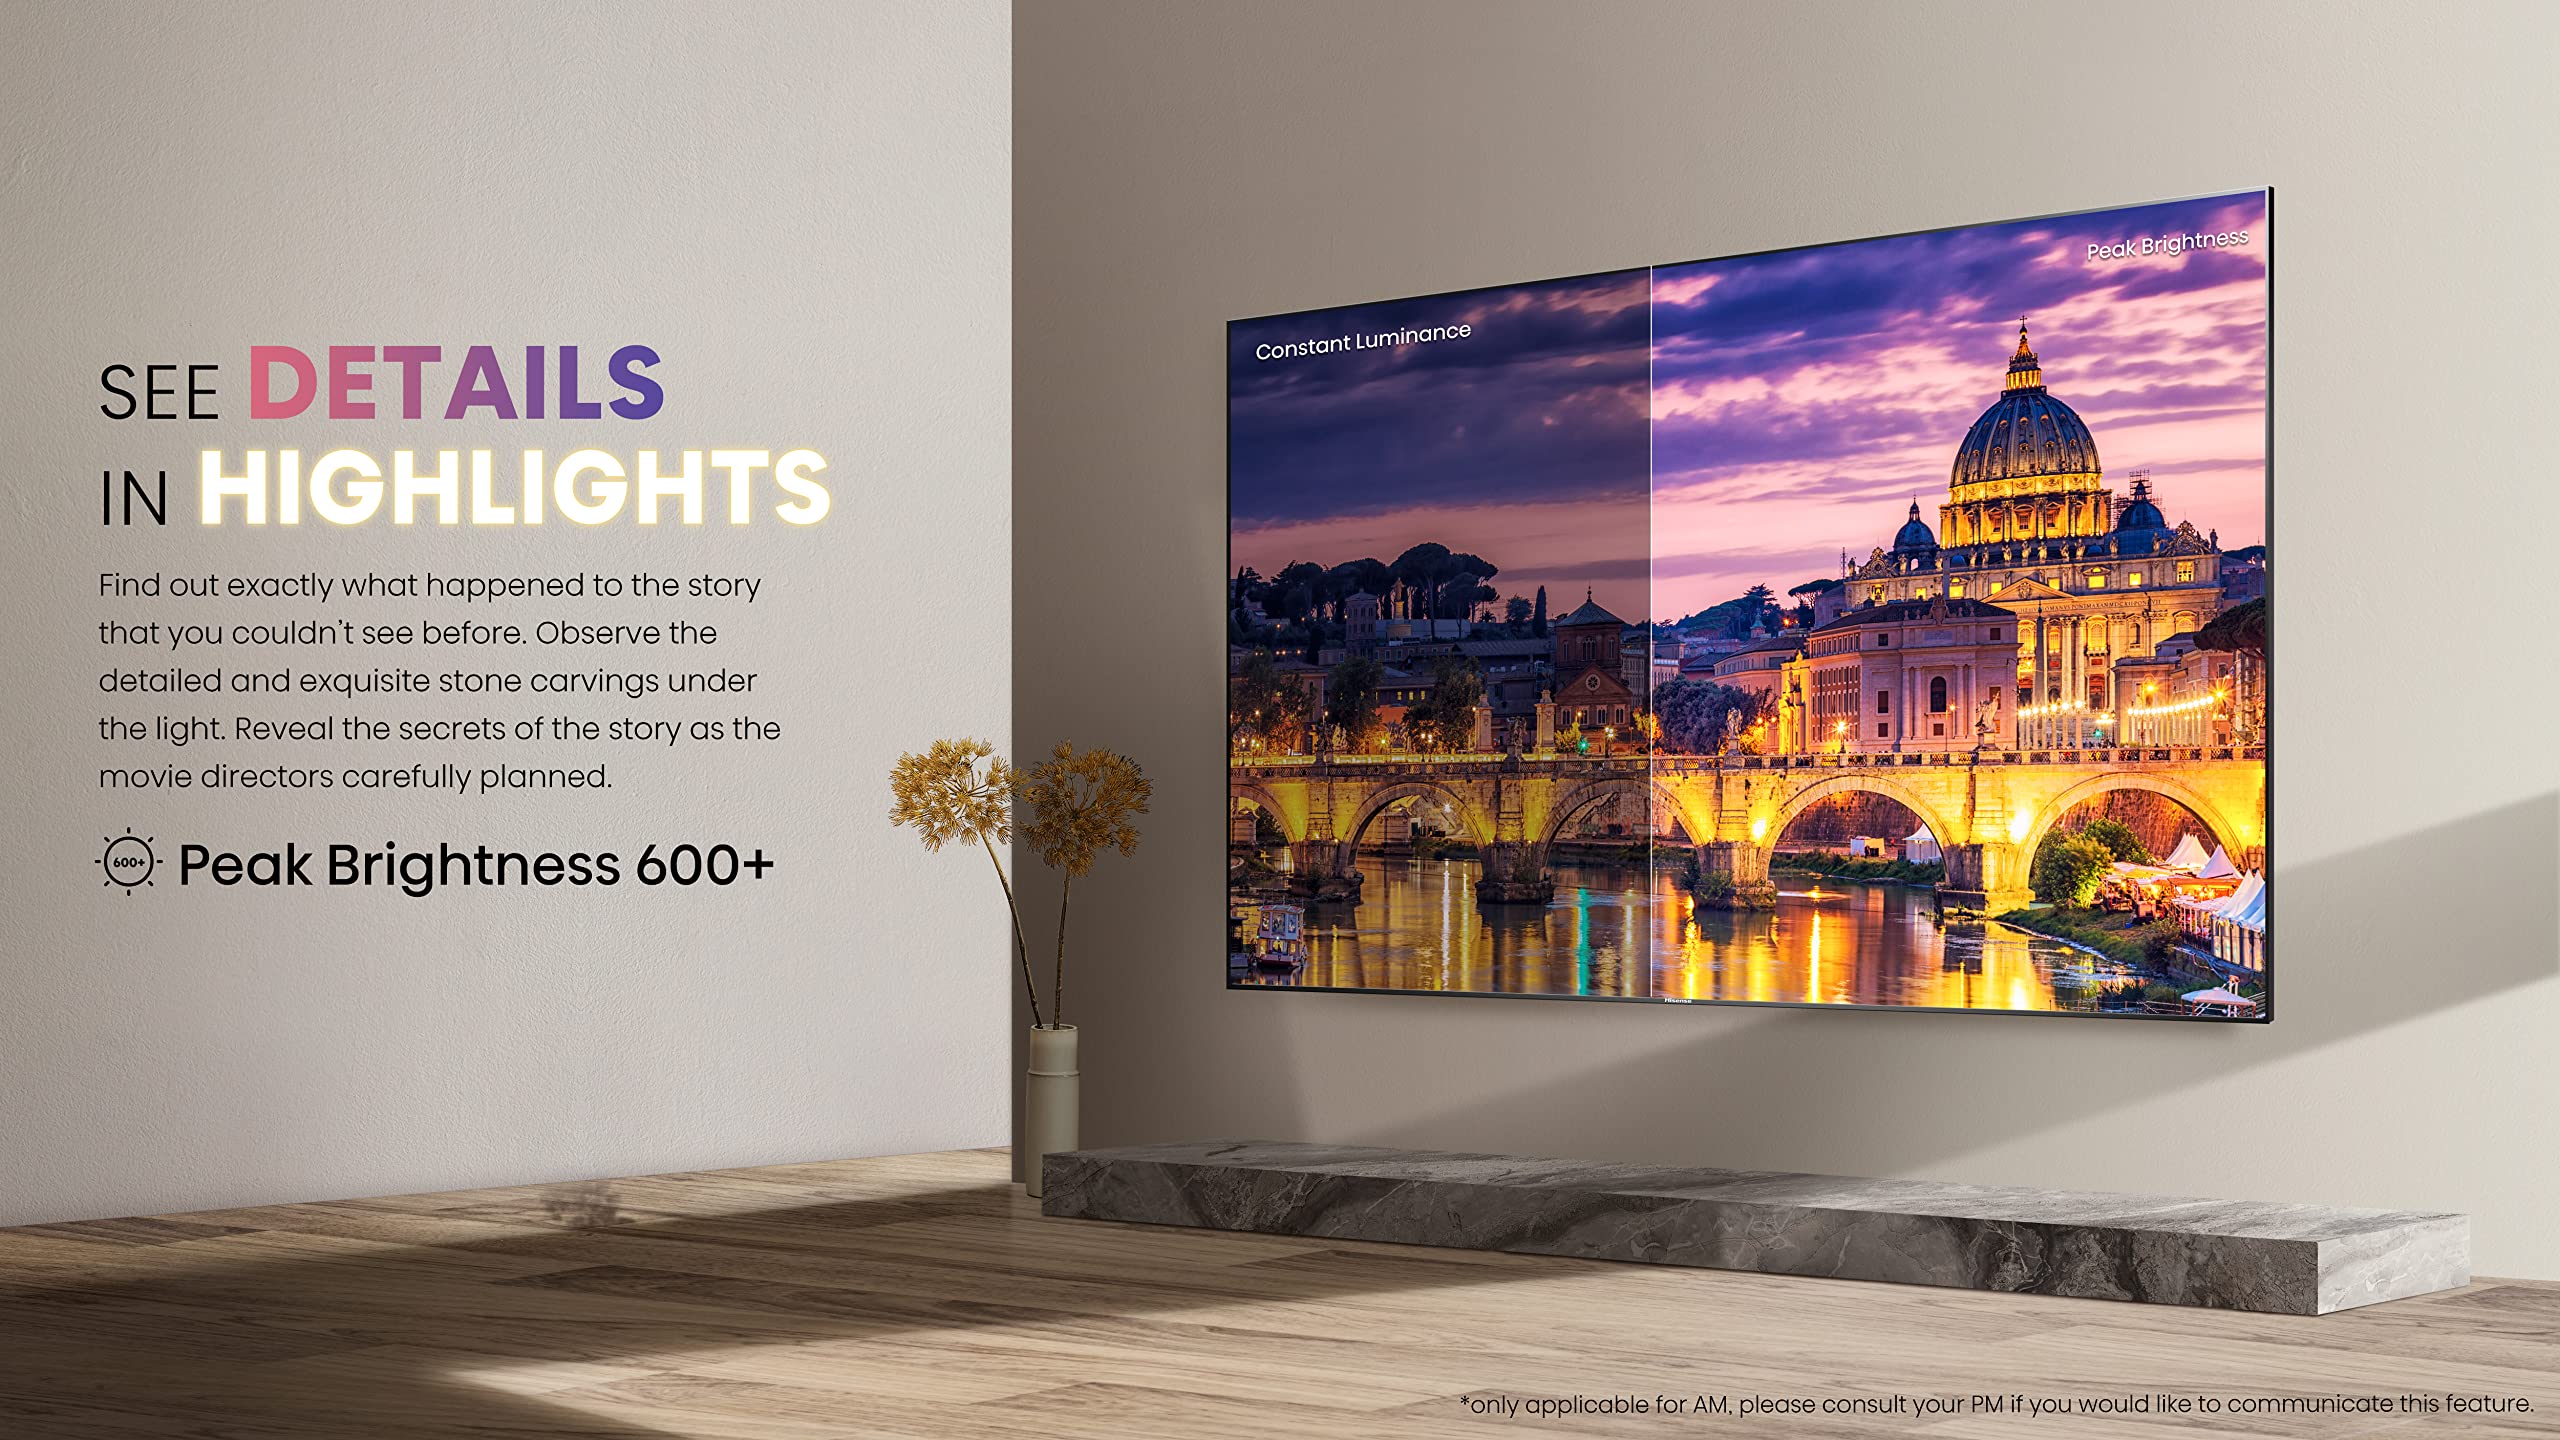 Hisense ULED 4K Premium 75U6H Quantum Dot QLED Series 75-Inch Smart Google TV, Dolby Vision Atmos, Voice Remote, Compatible with Alexa (2022 Model) Black